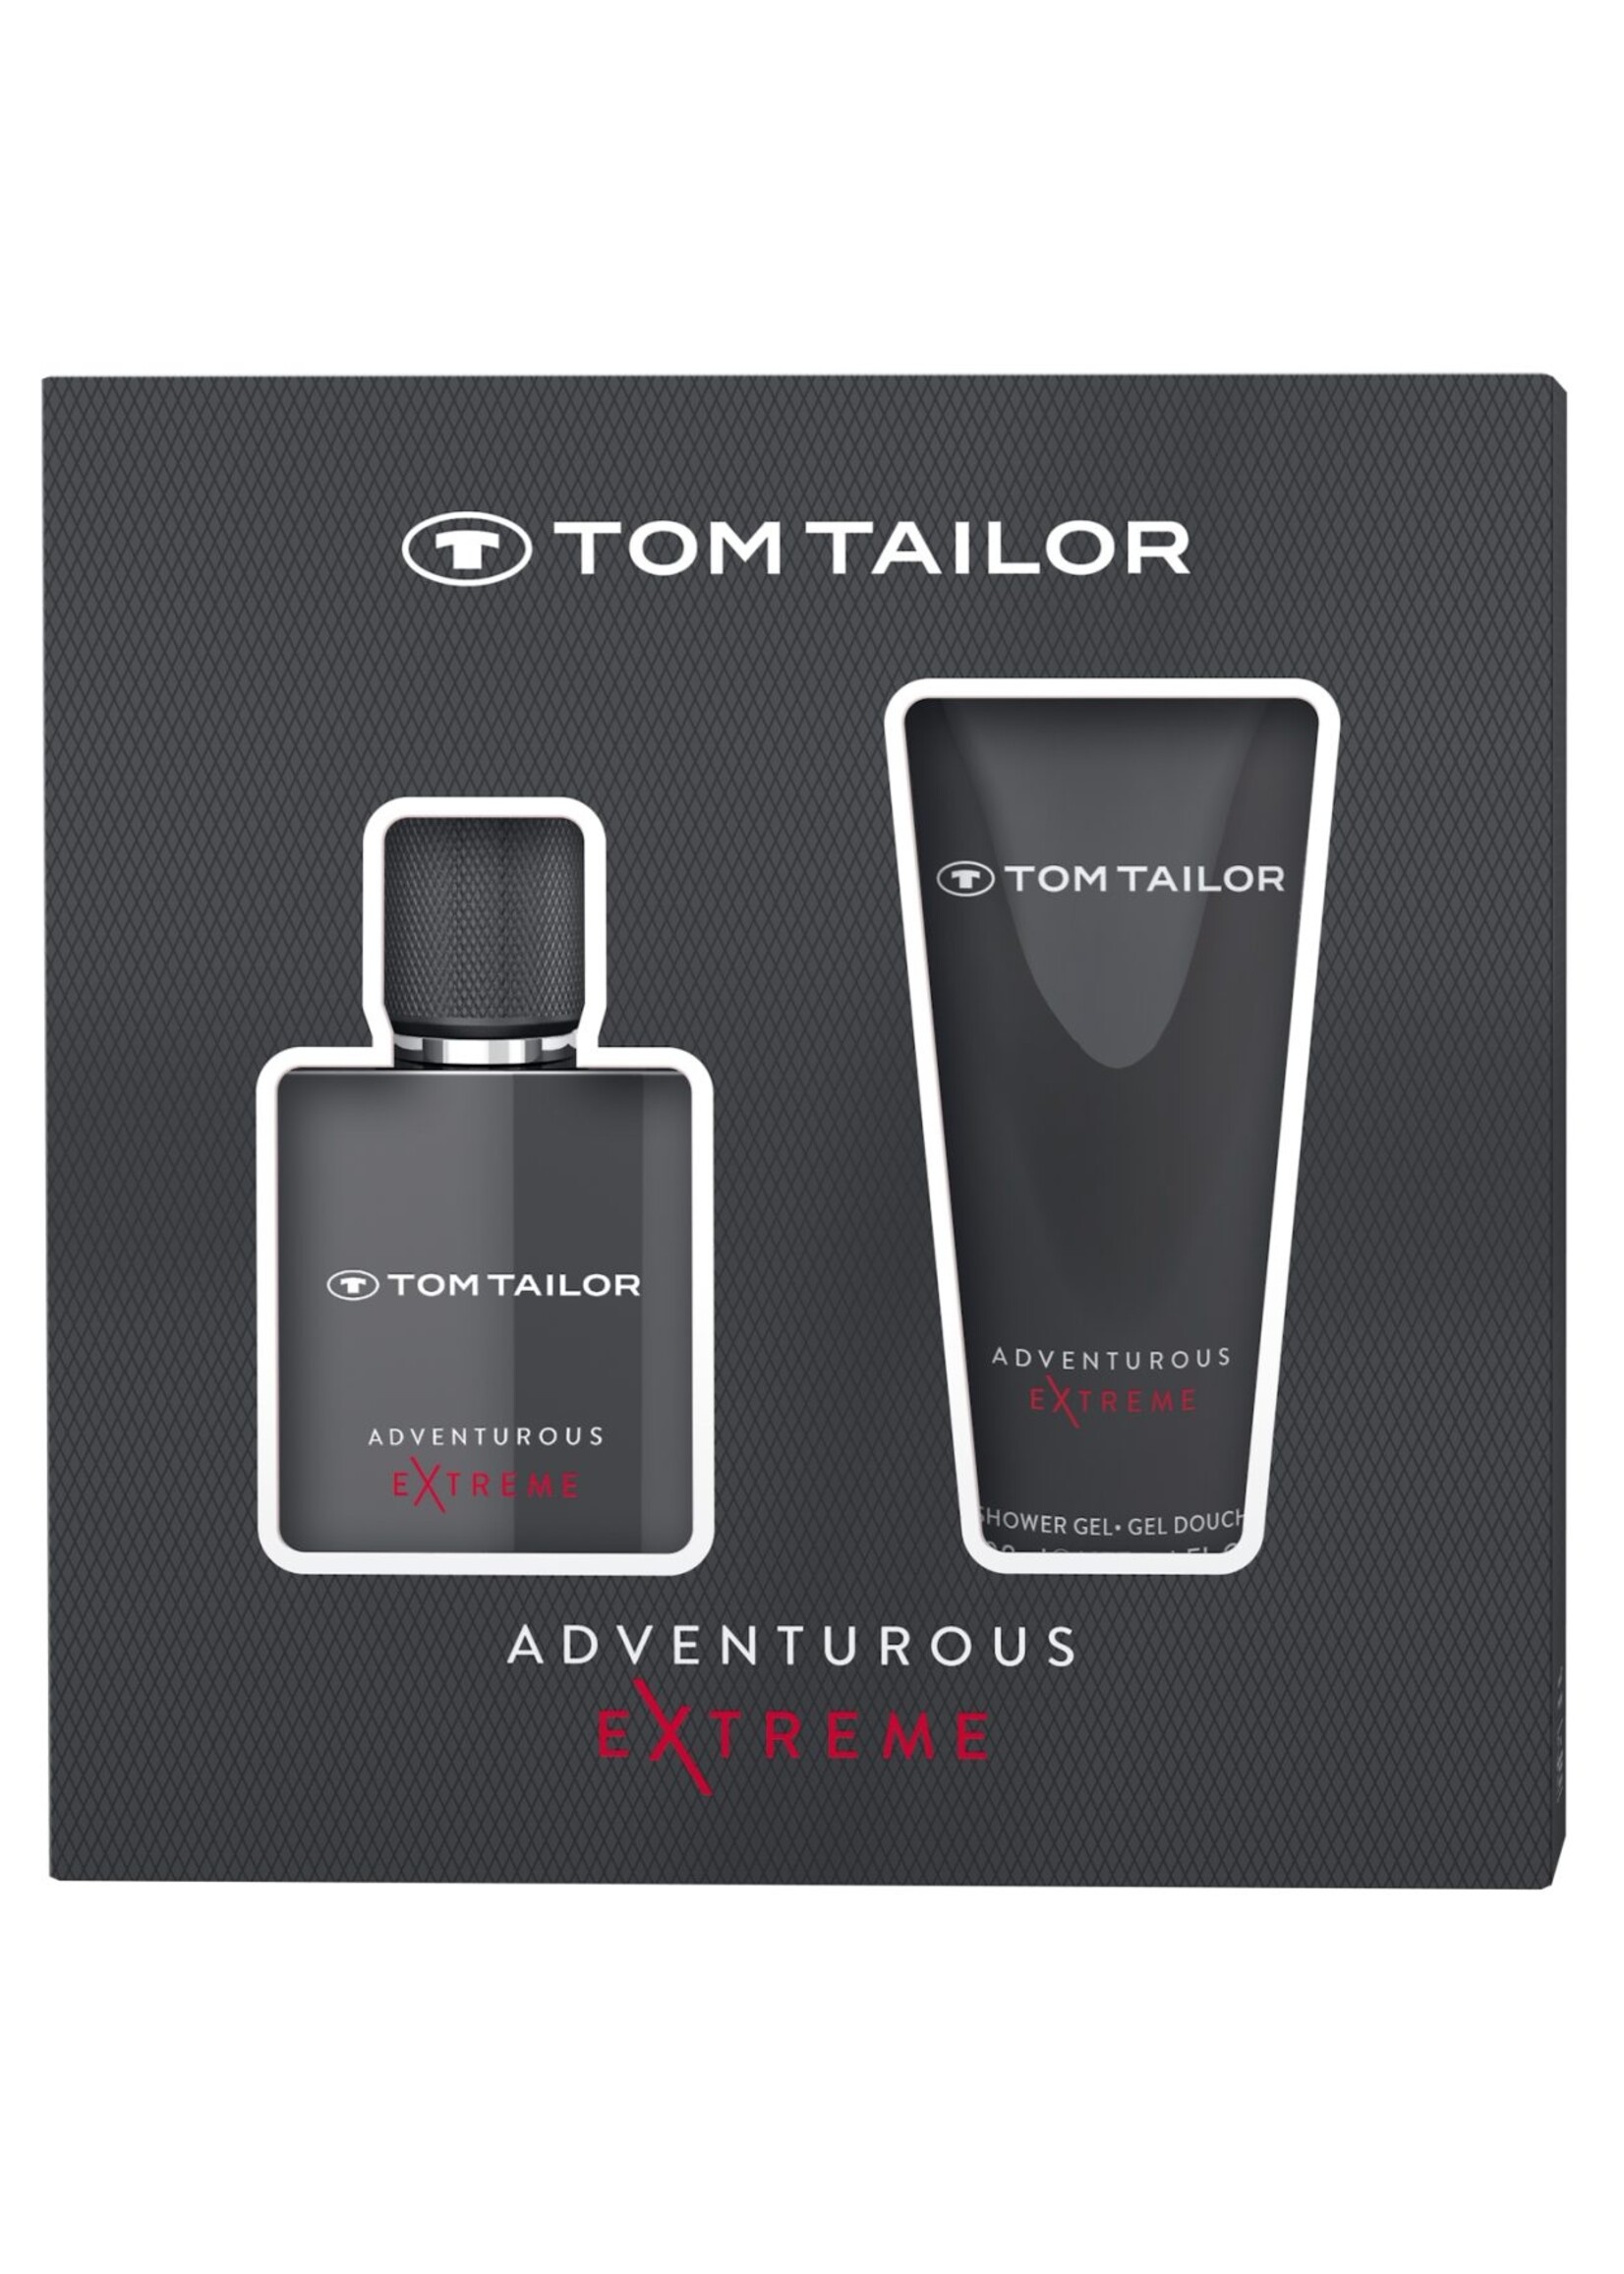 Tom Tailor Adventurous Extreme Giftset